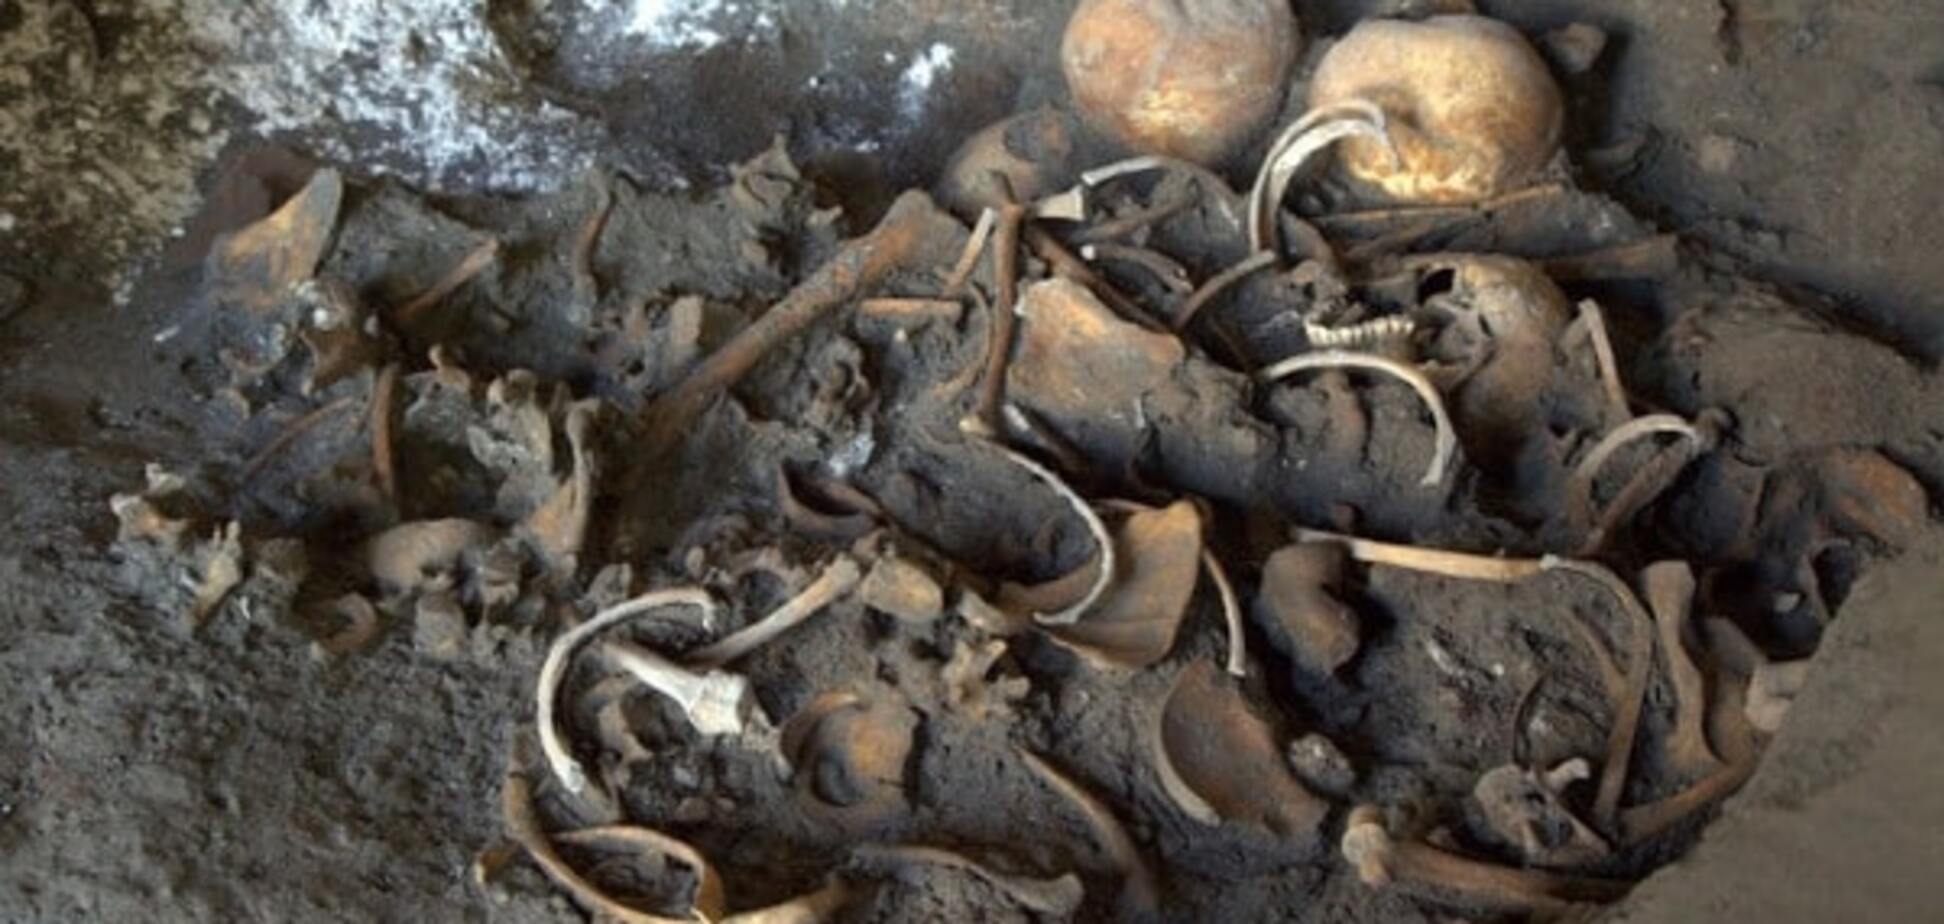 Находки Помпеи: археологи обнаружили скелеты жертв Везувия и доримское захоронение IV века до н.э. Фото